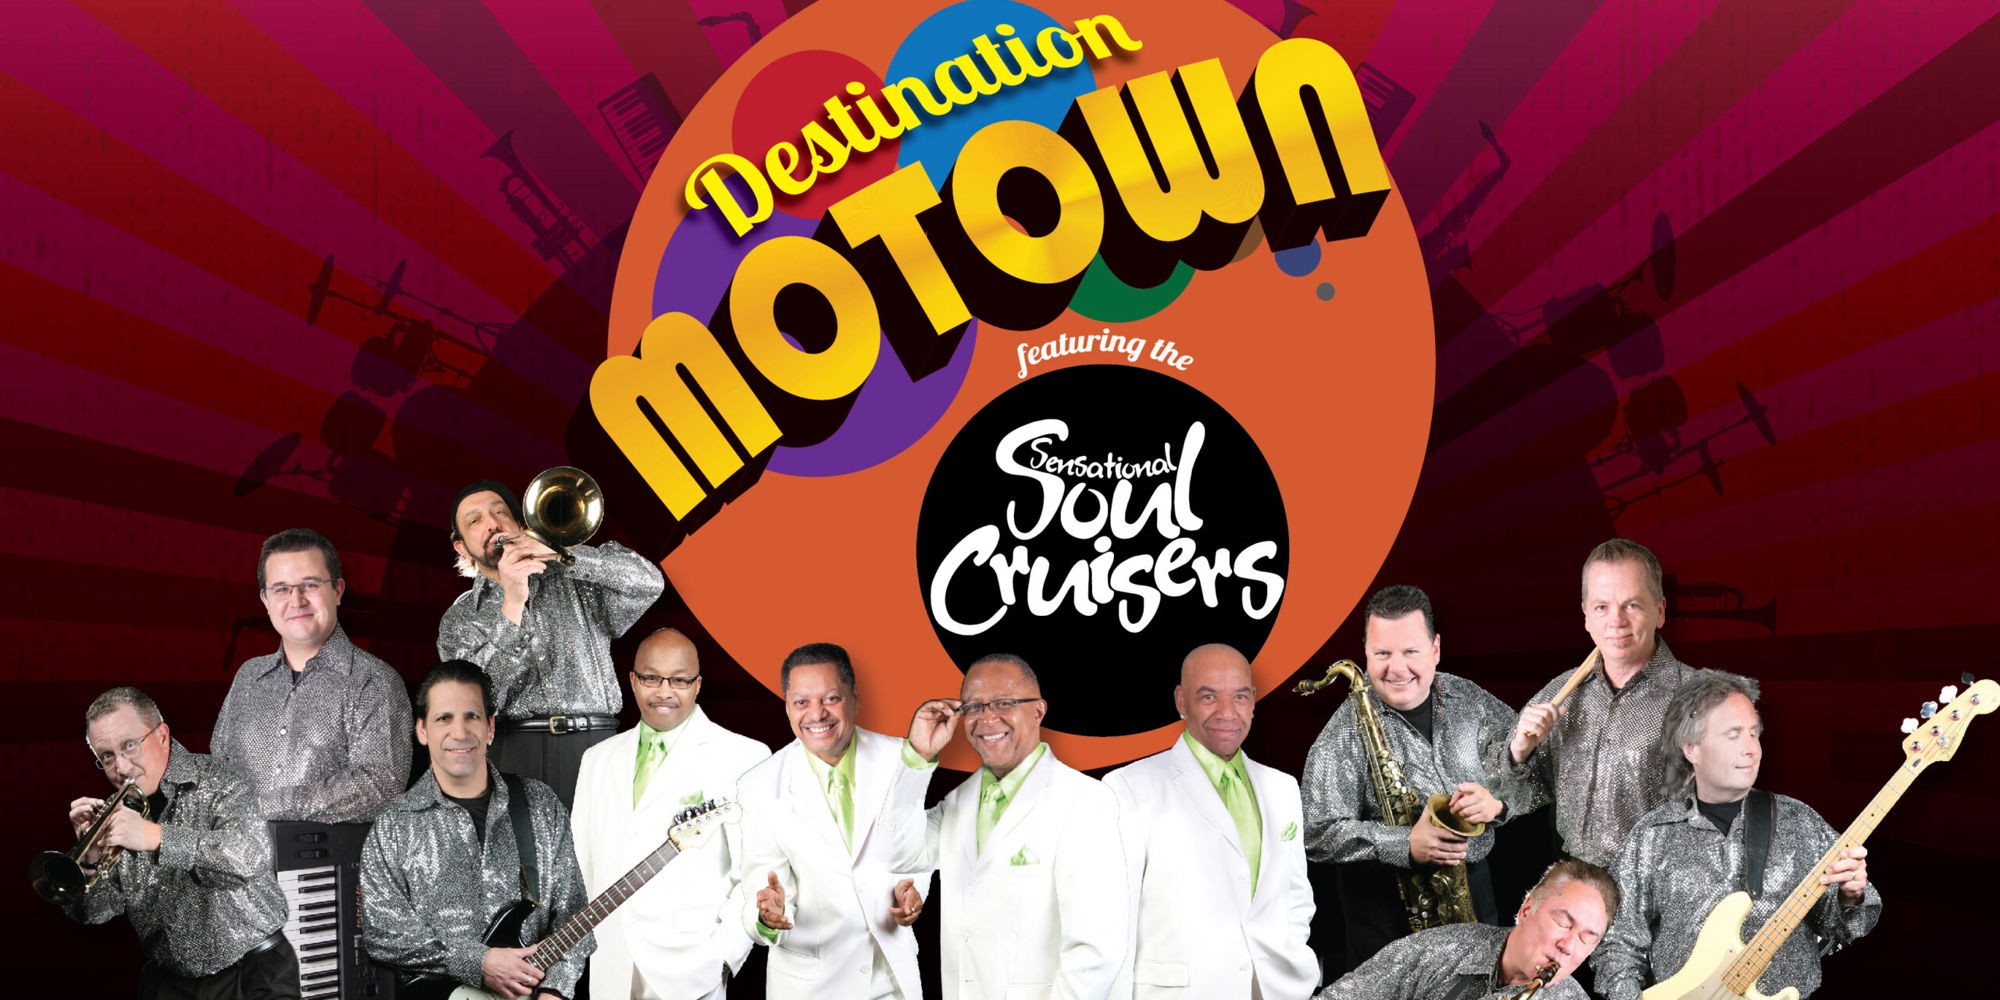 Destination Motown - featuring the Sensational Soul Cruisers promotional image